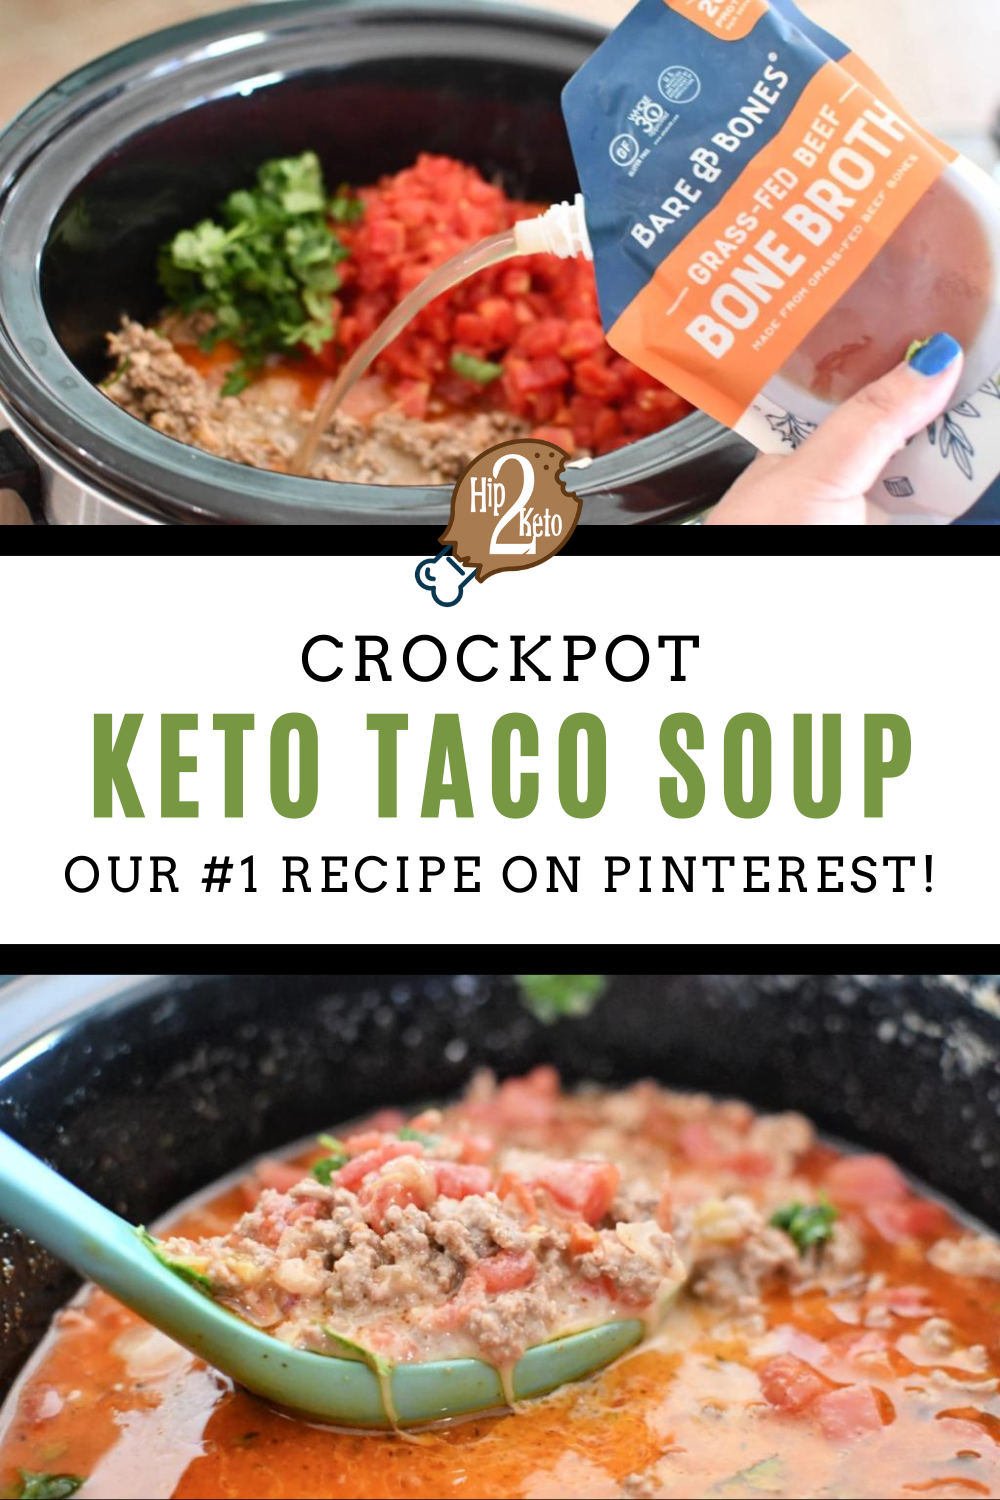 Crock Pot Low-Carb Taco Soup - Keto Taco Soup - Beyer Eats and Drinks